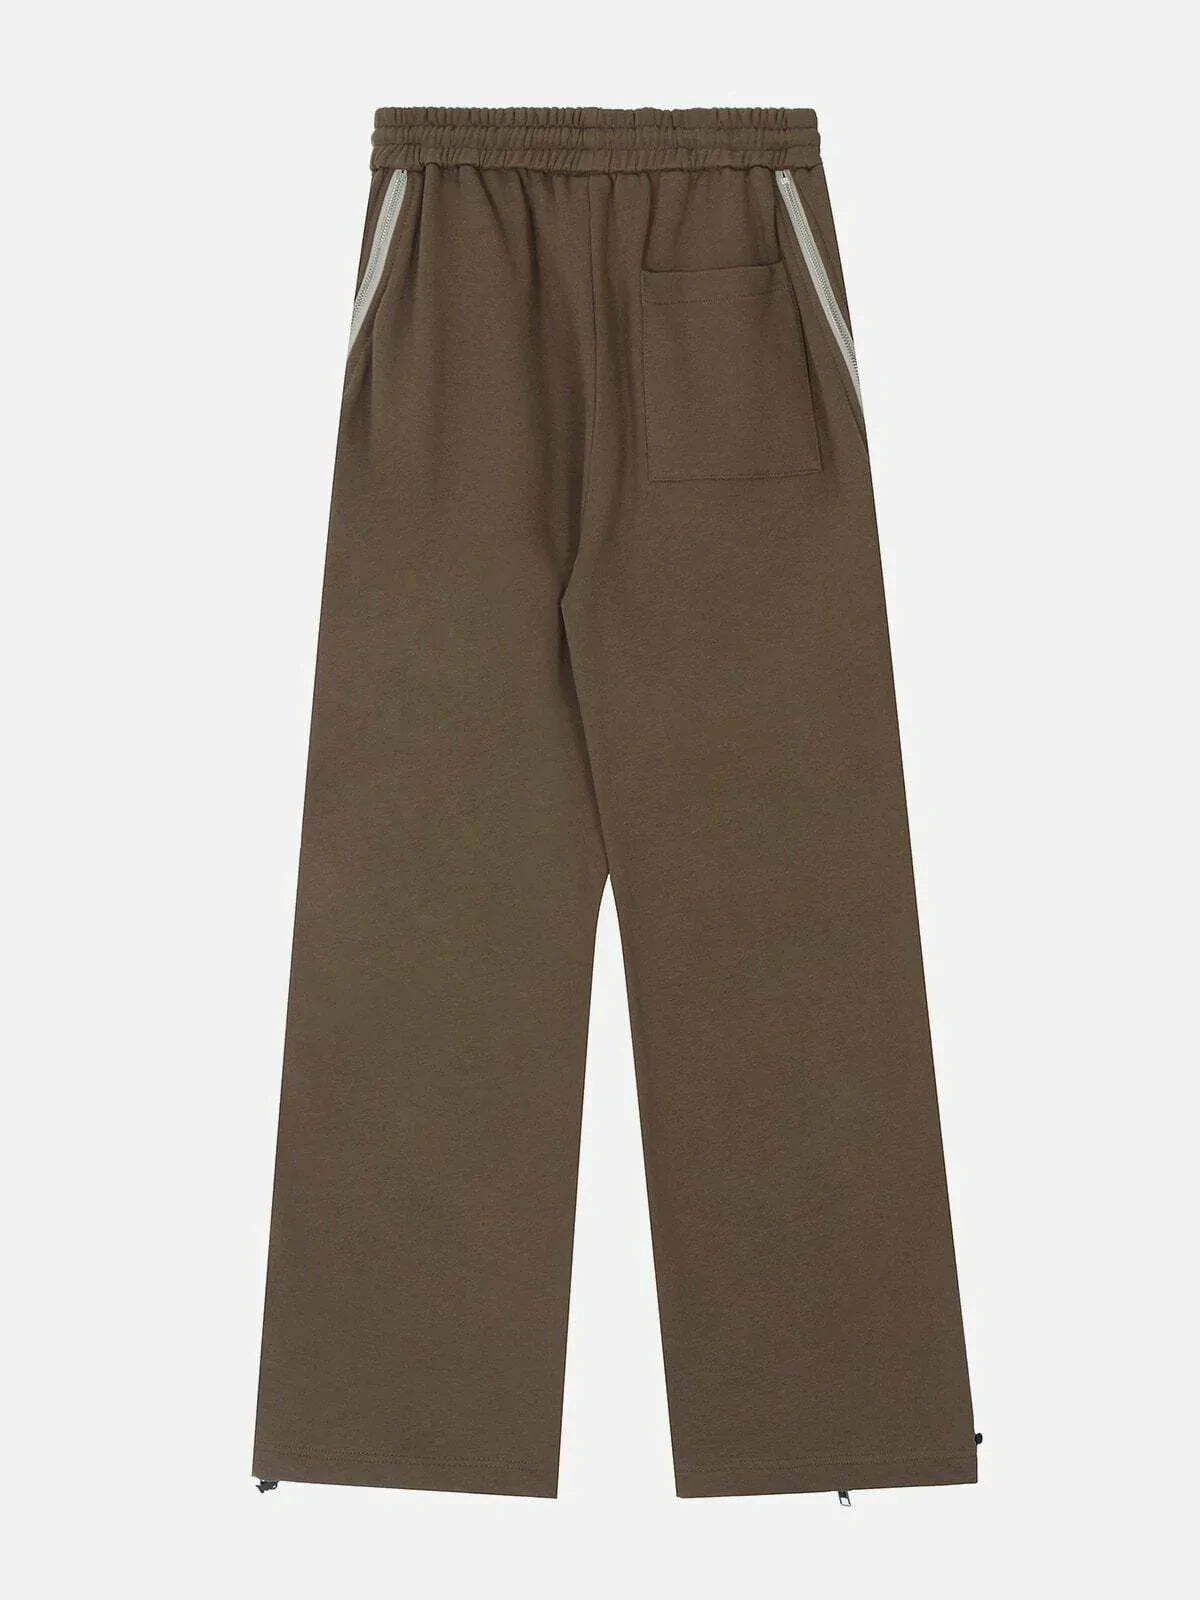 dynamic zipper design pants letter print statement 2387